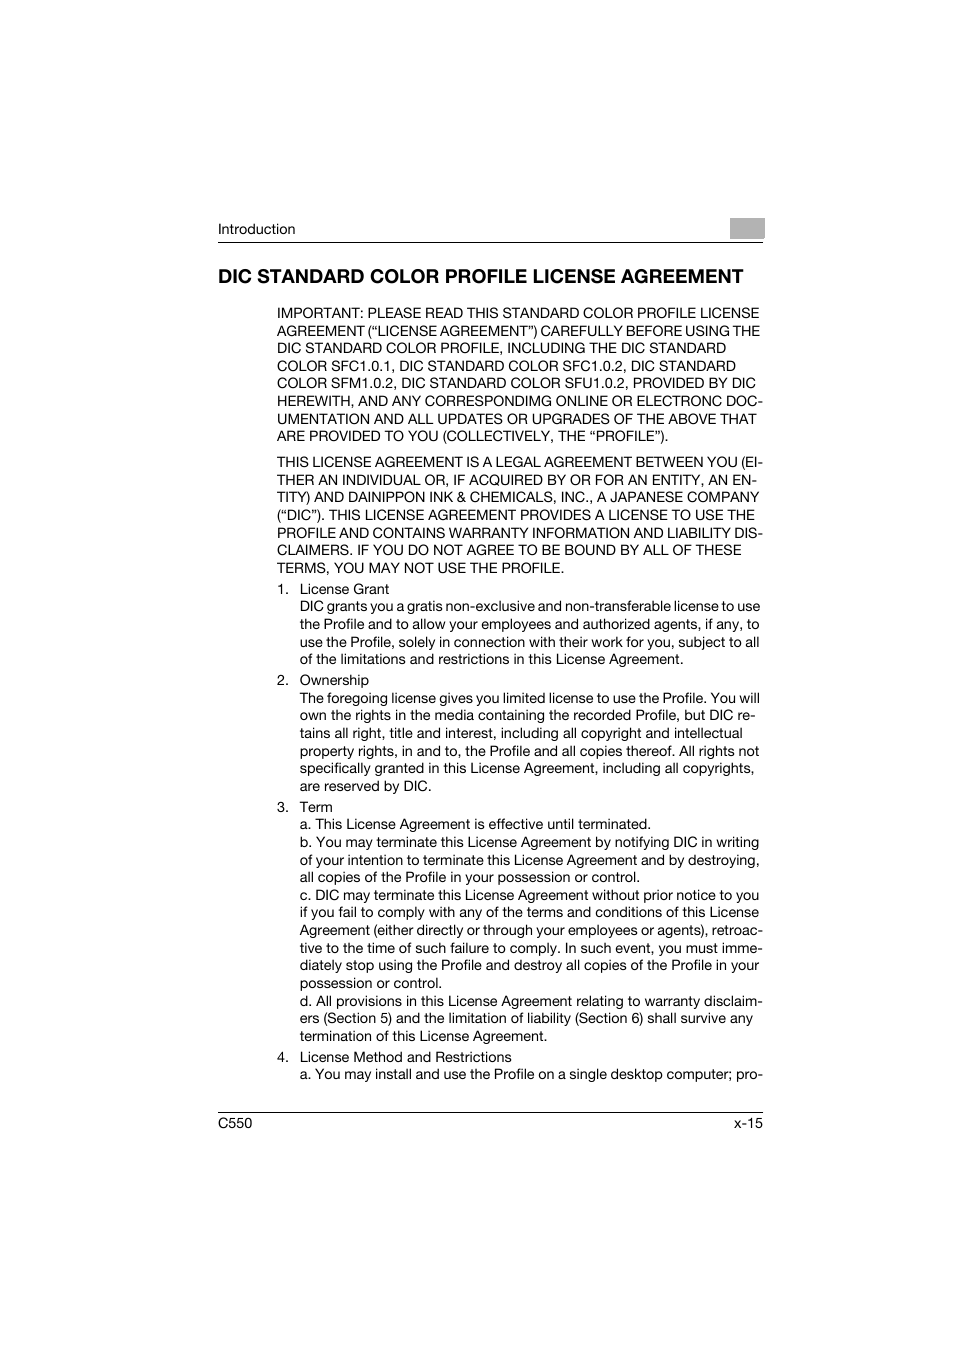 Dic standard color profile license agreement | Konica Minolta bizhub C550 User Manual | Page 16 / 102